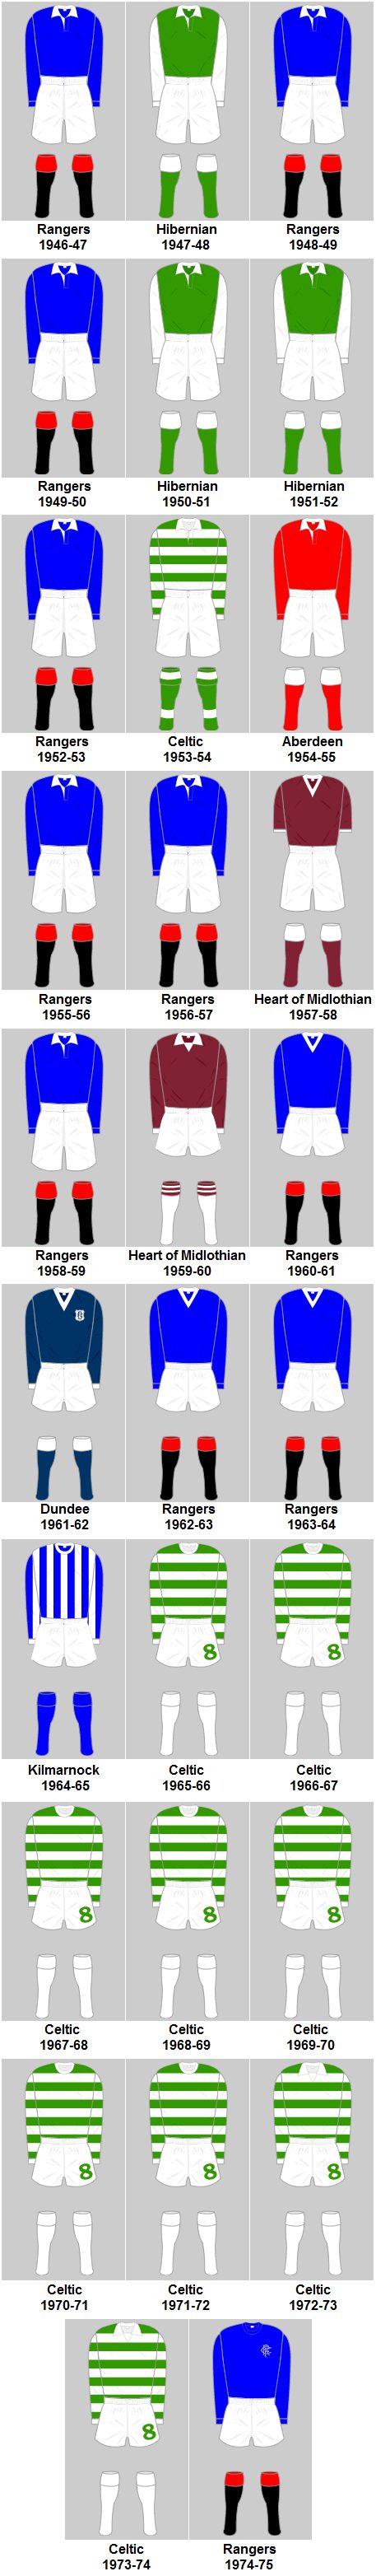 Scottish Top Flight Champions Football Kits 1946-47 to 1974-75